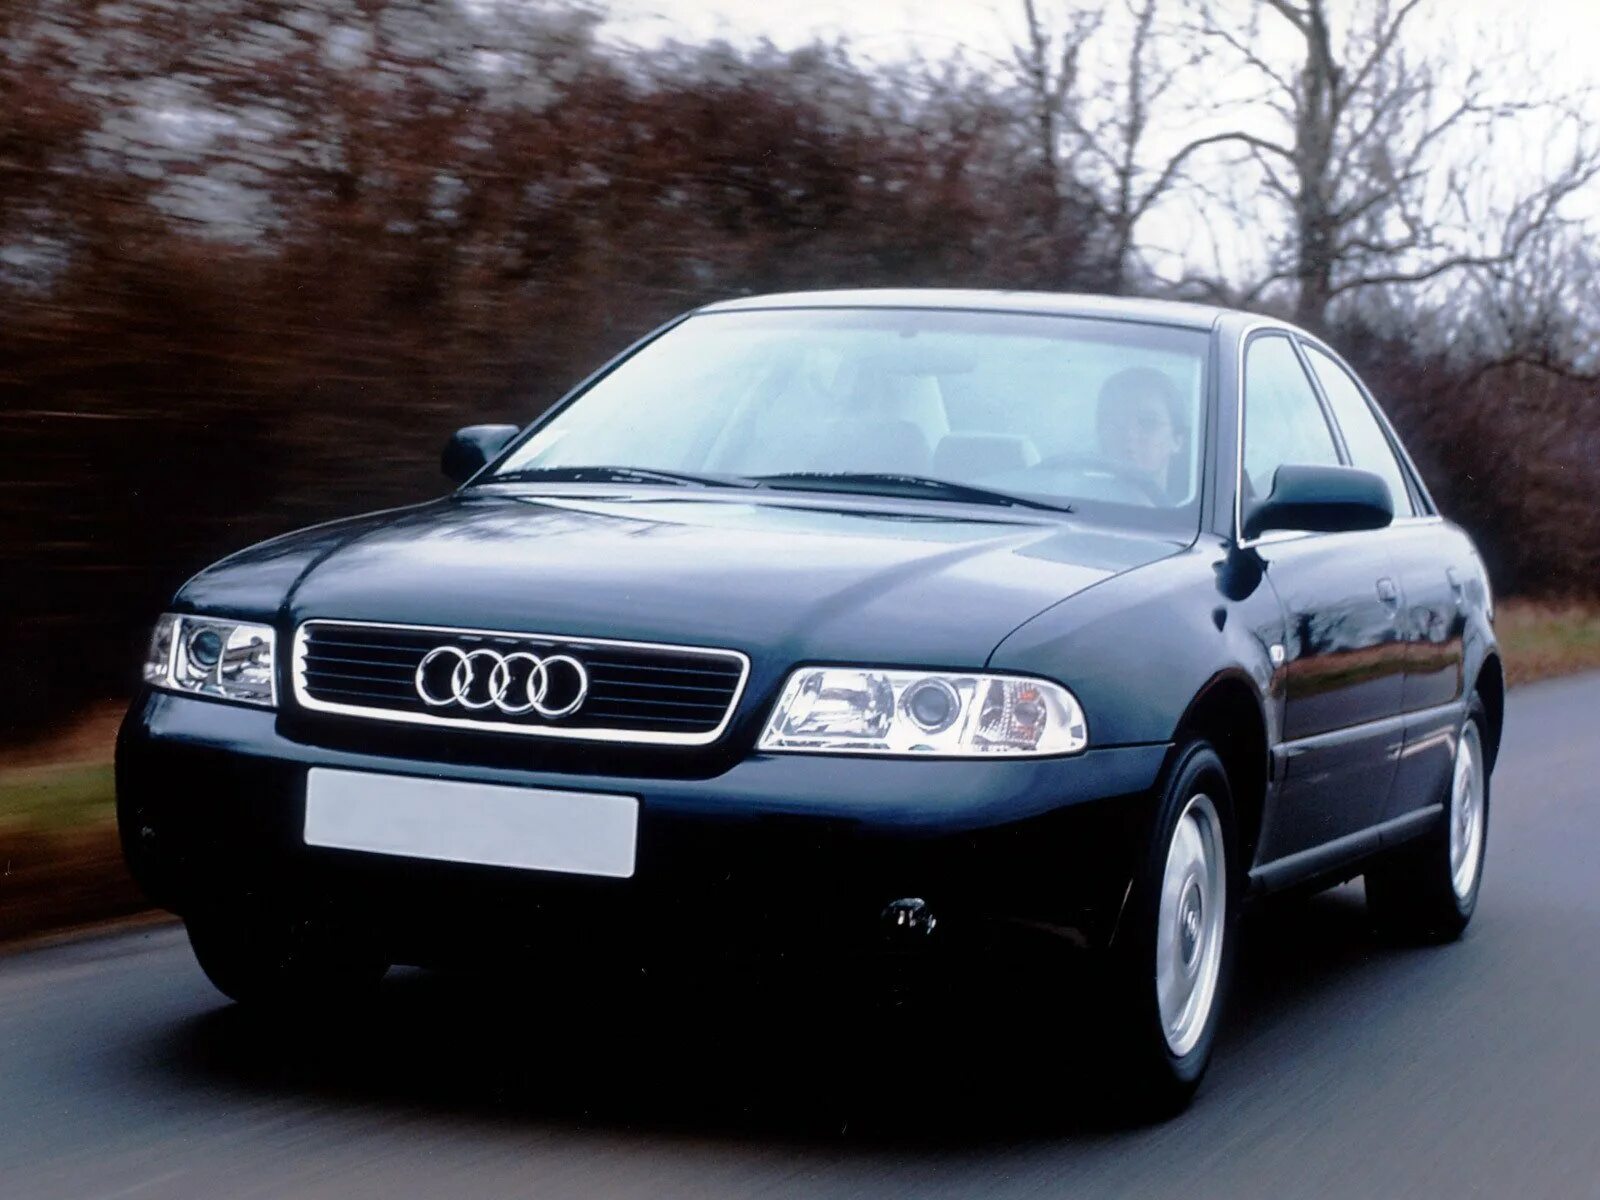 Audi a4 b5 2000. Audi a4 1997. Audi a4 b5 Рестайлинг. Audi a4 b5 1997. Купить ауди а4б5